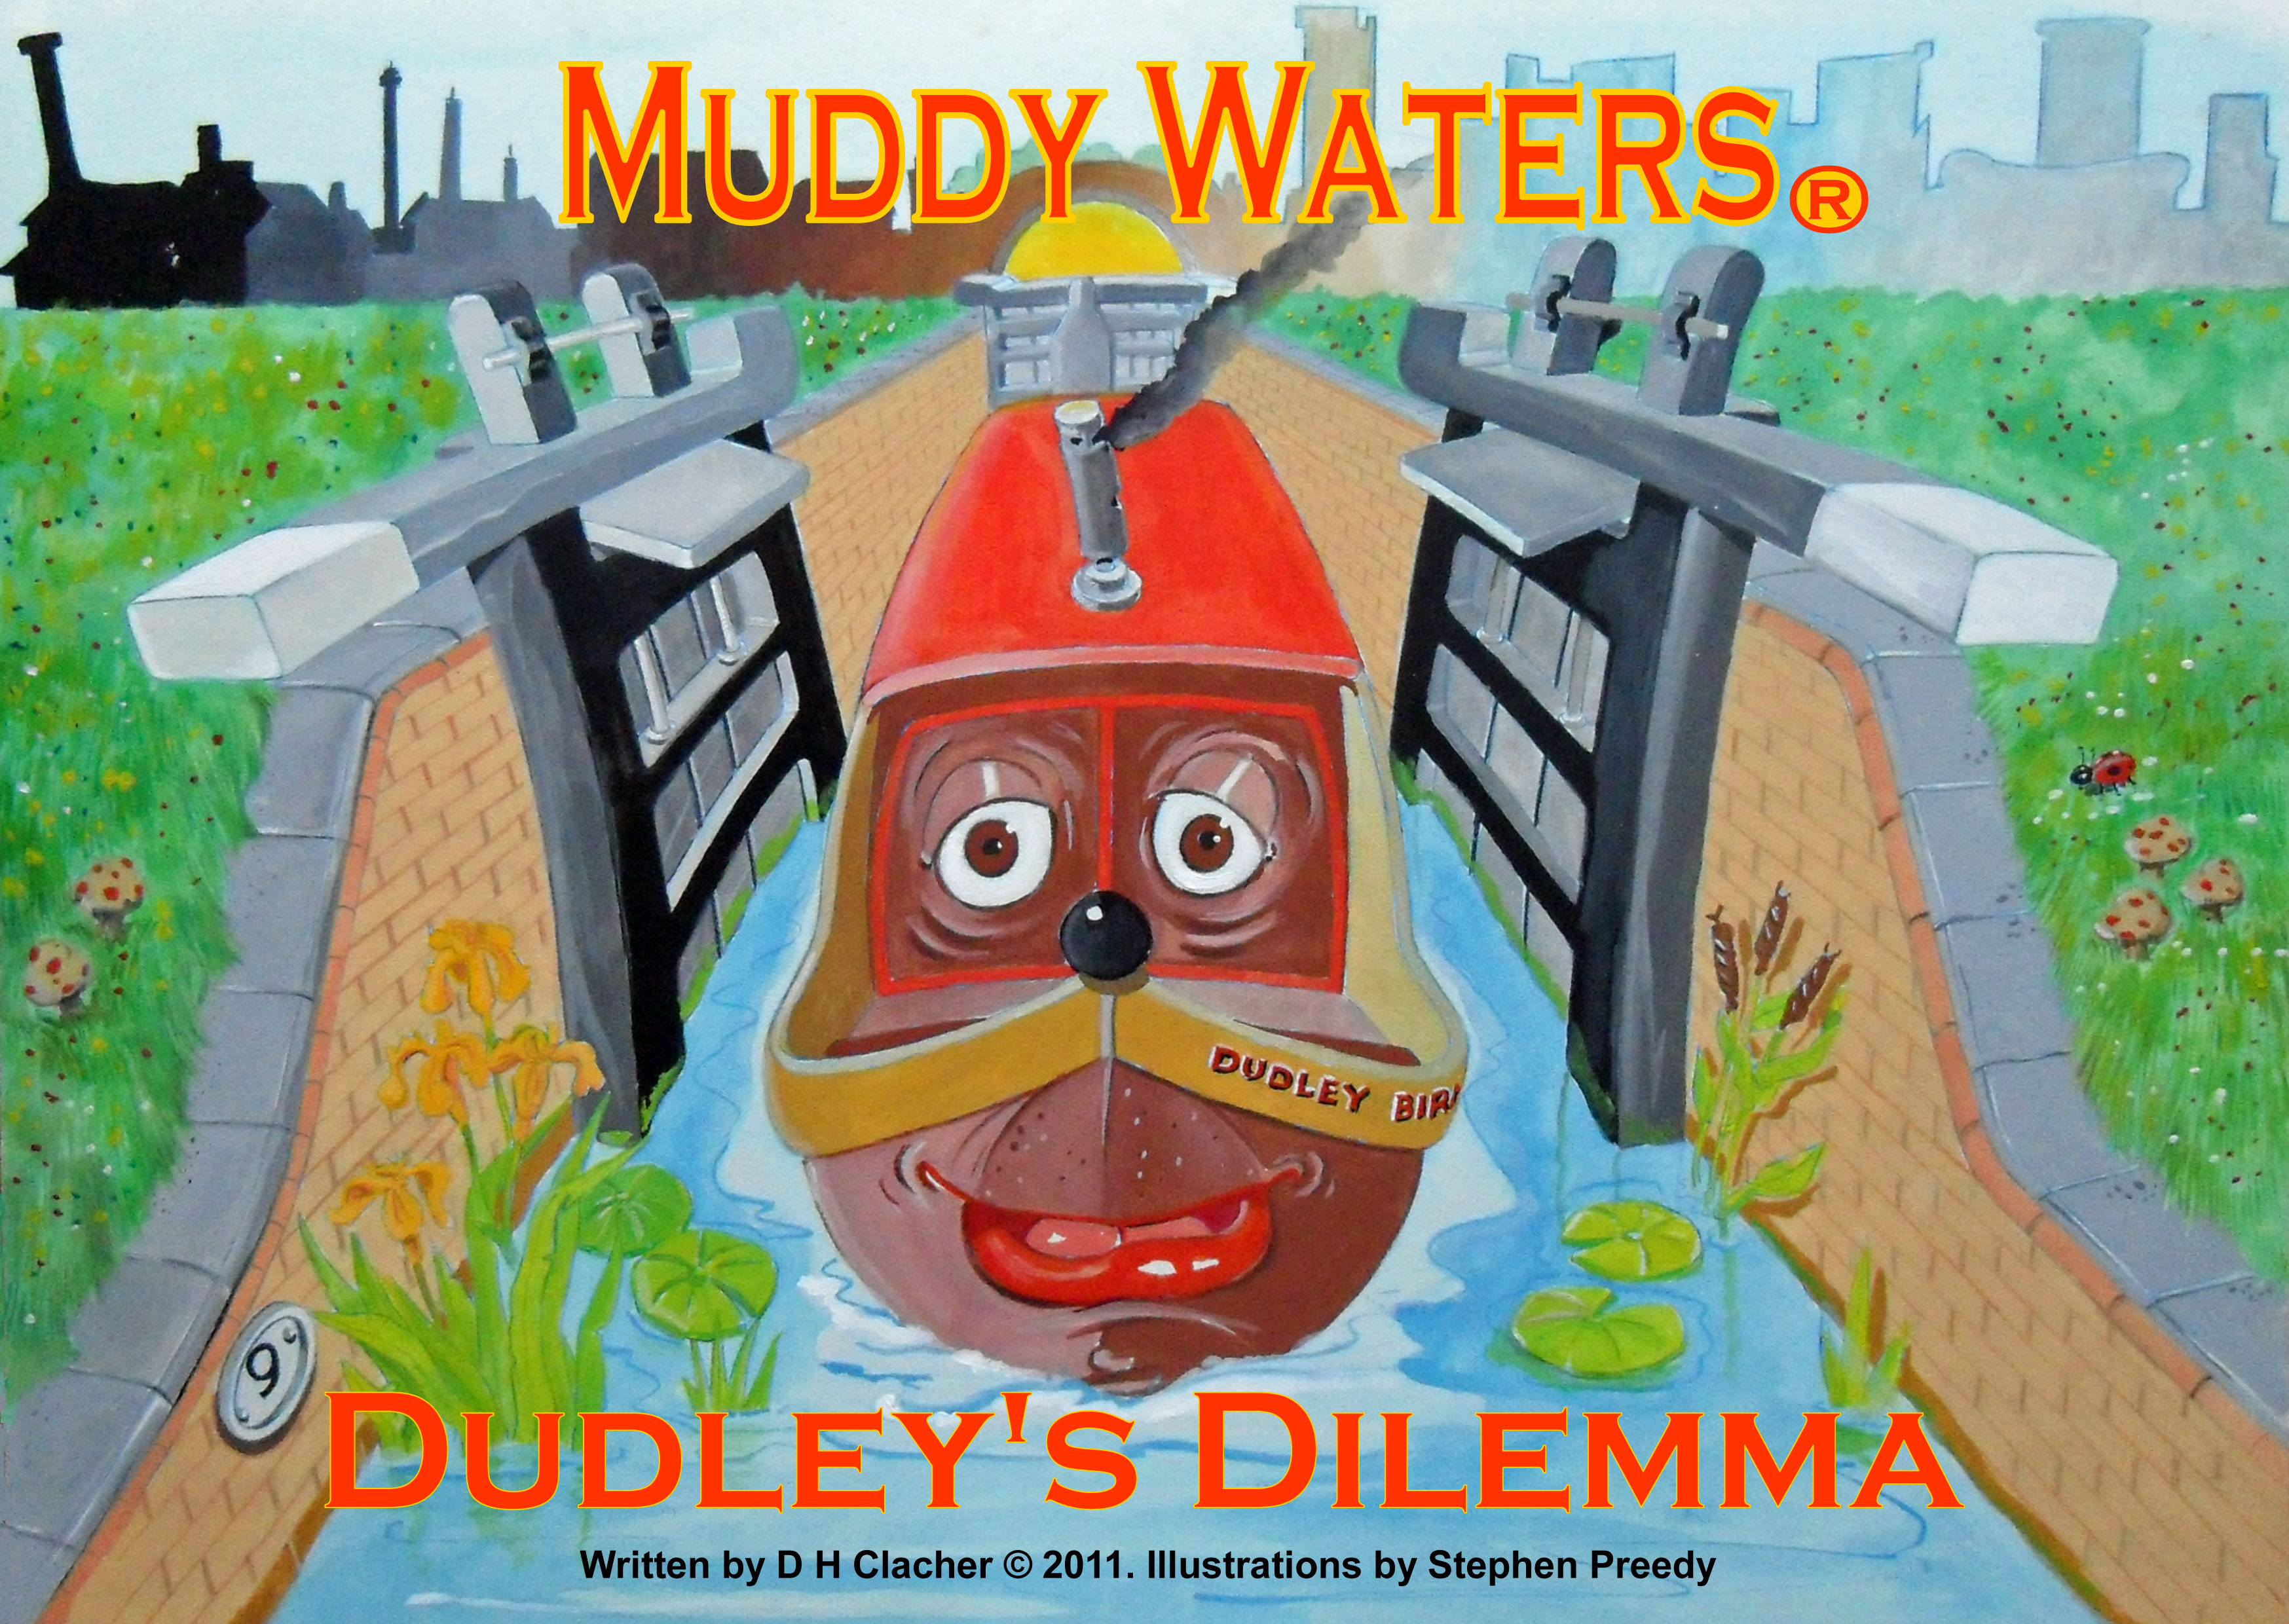 Dudley's Dilemma